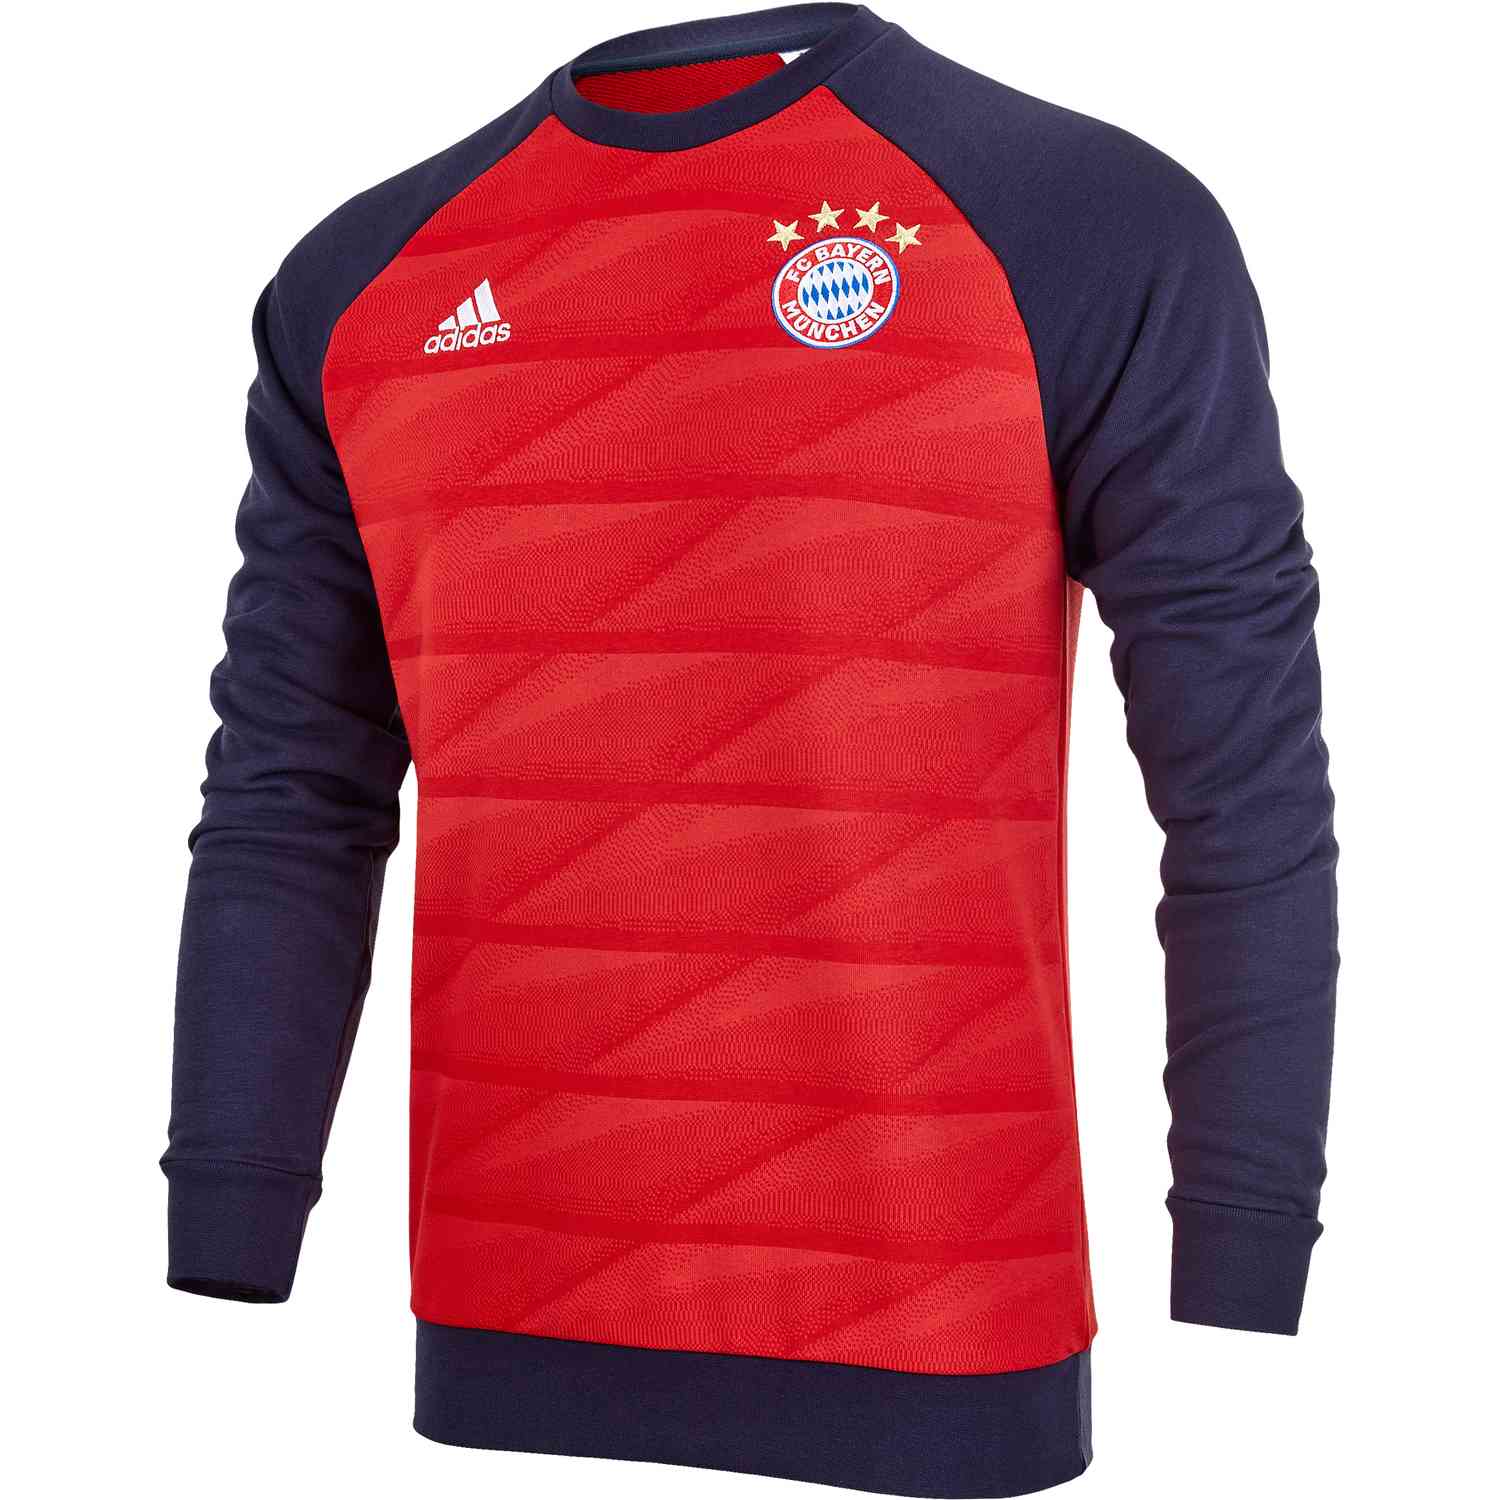 Kids adidas Bayern Munich Crew Sweatshirt - Red/Night Navy SoccerPro